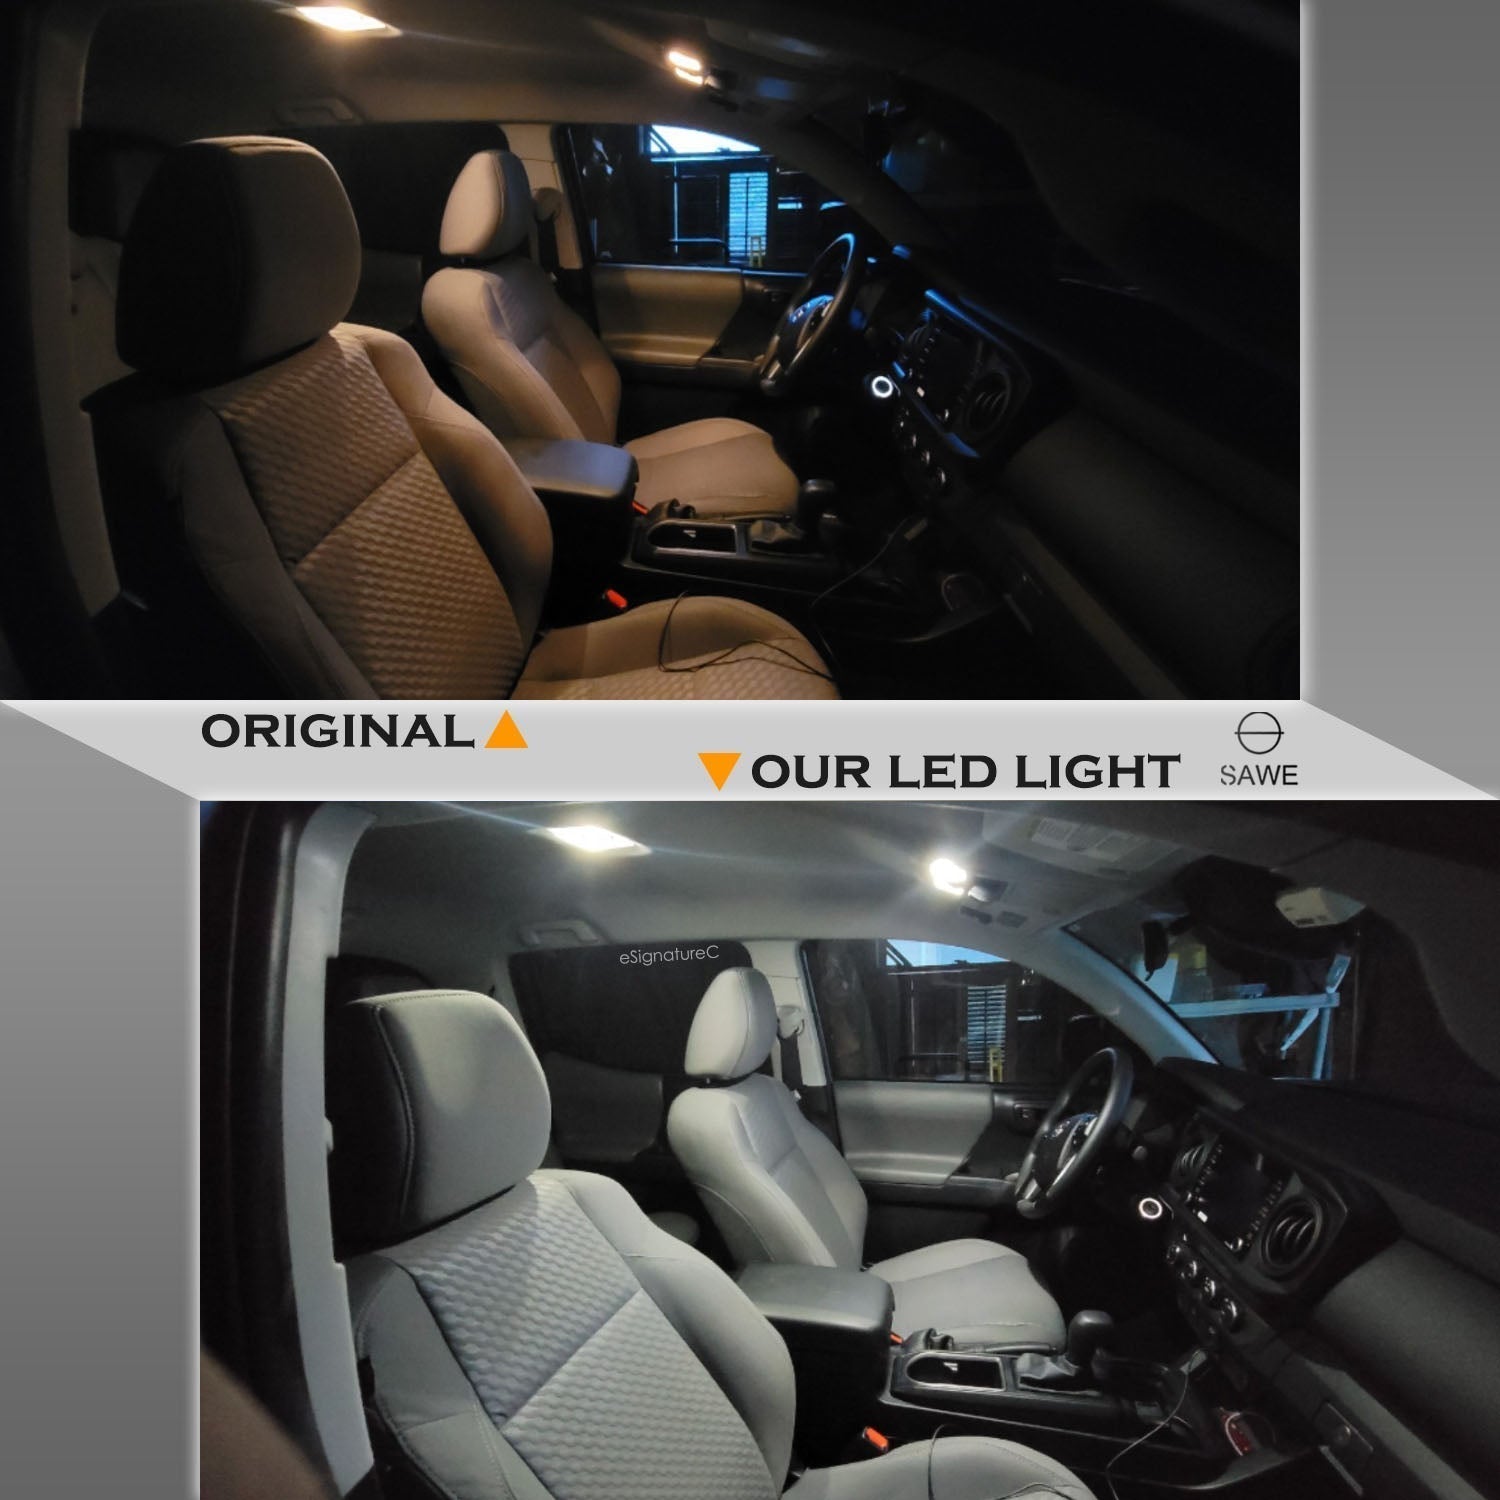 For Dodge Ram 1500 2500 3500 Interior LED Lights - Dome & Map Lights Package Kit for 2002 - 2011 - White